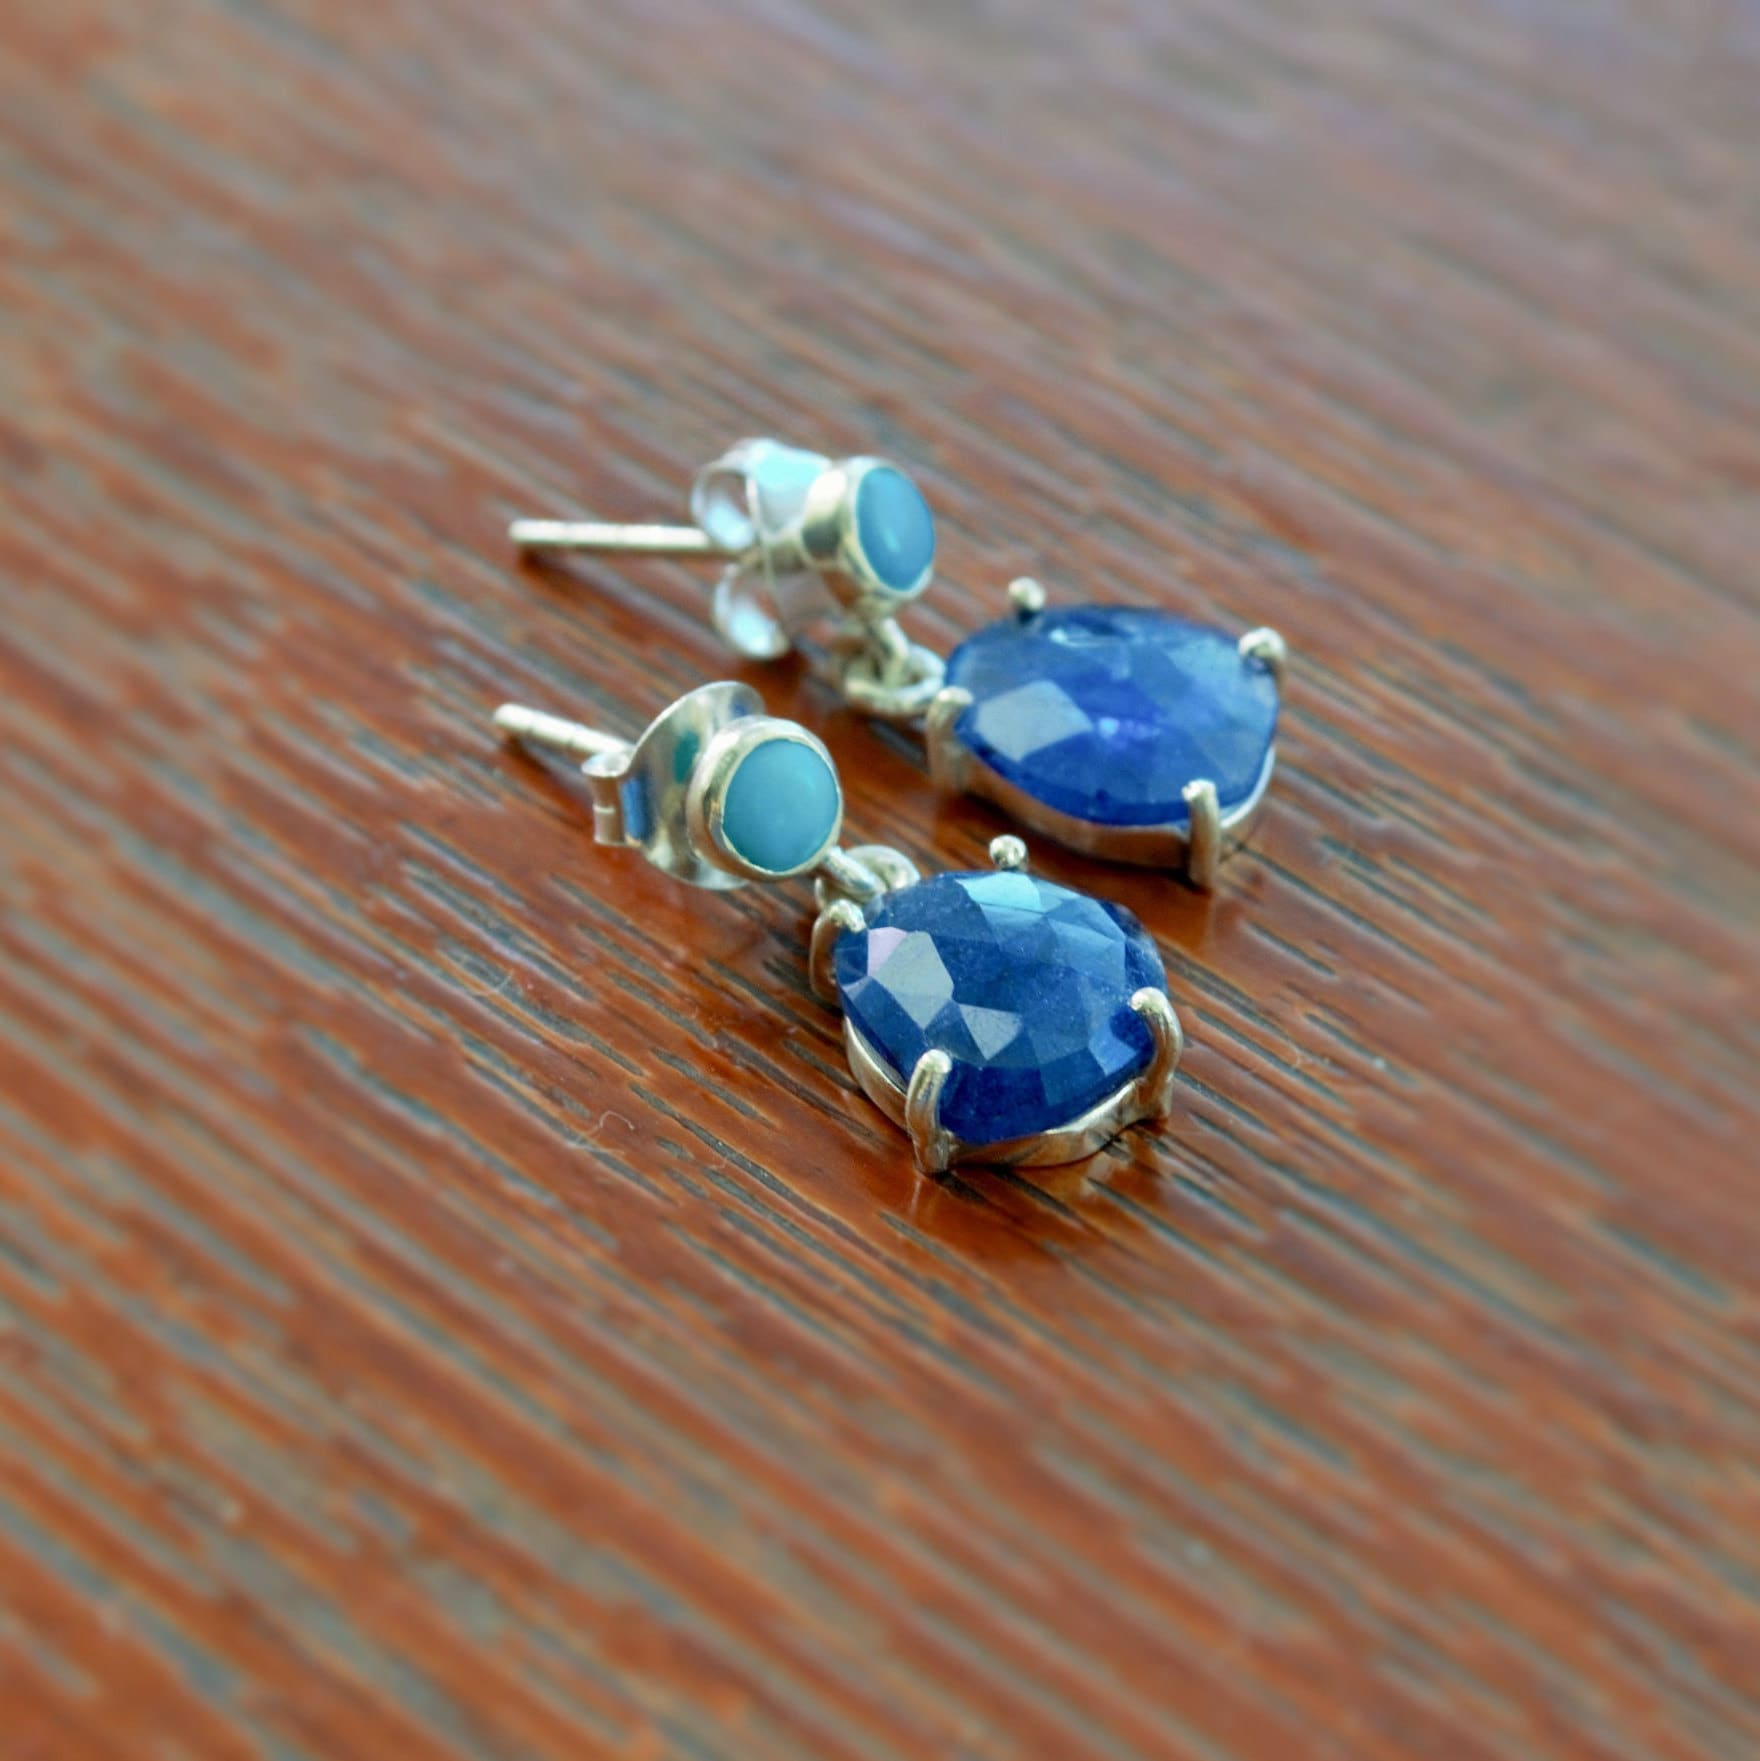 Blue Sapphire, Turquoise Earrings, Sterling Silver Teardrop Earrings, September, December Birthstone, Birthday Gift For Her, Cute Gemstone